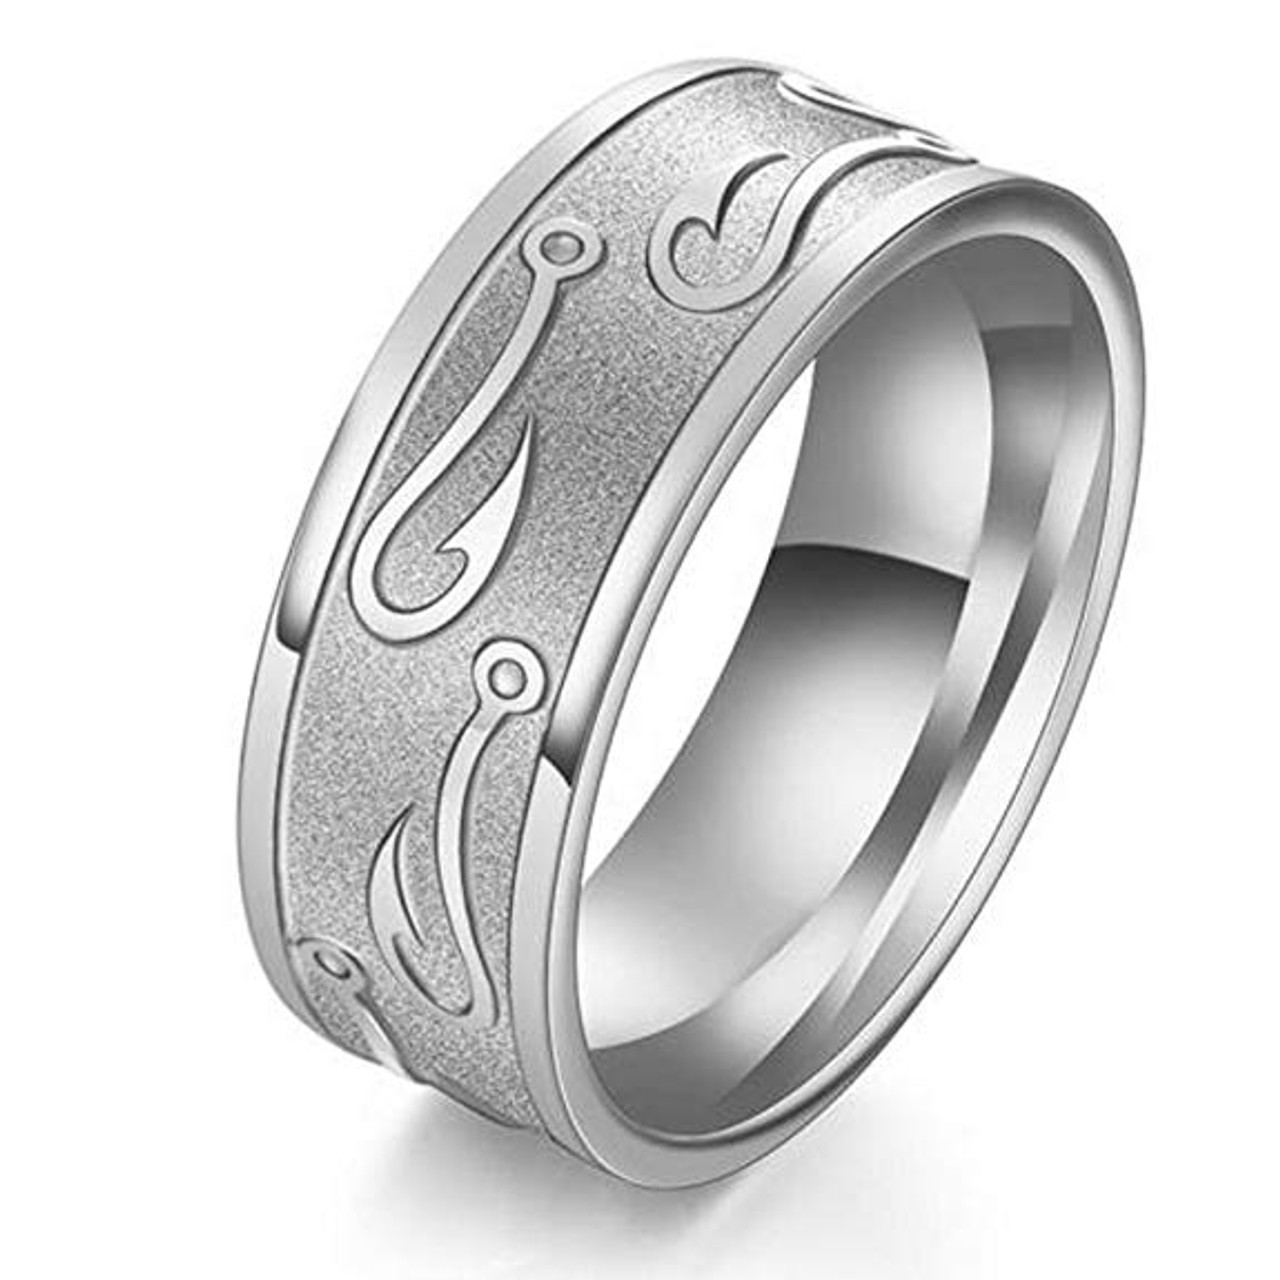 8mm) Unisex or Men's Fishing Ring / Fisherman's Wedding ring band